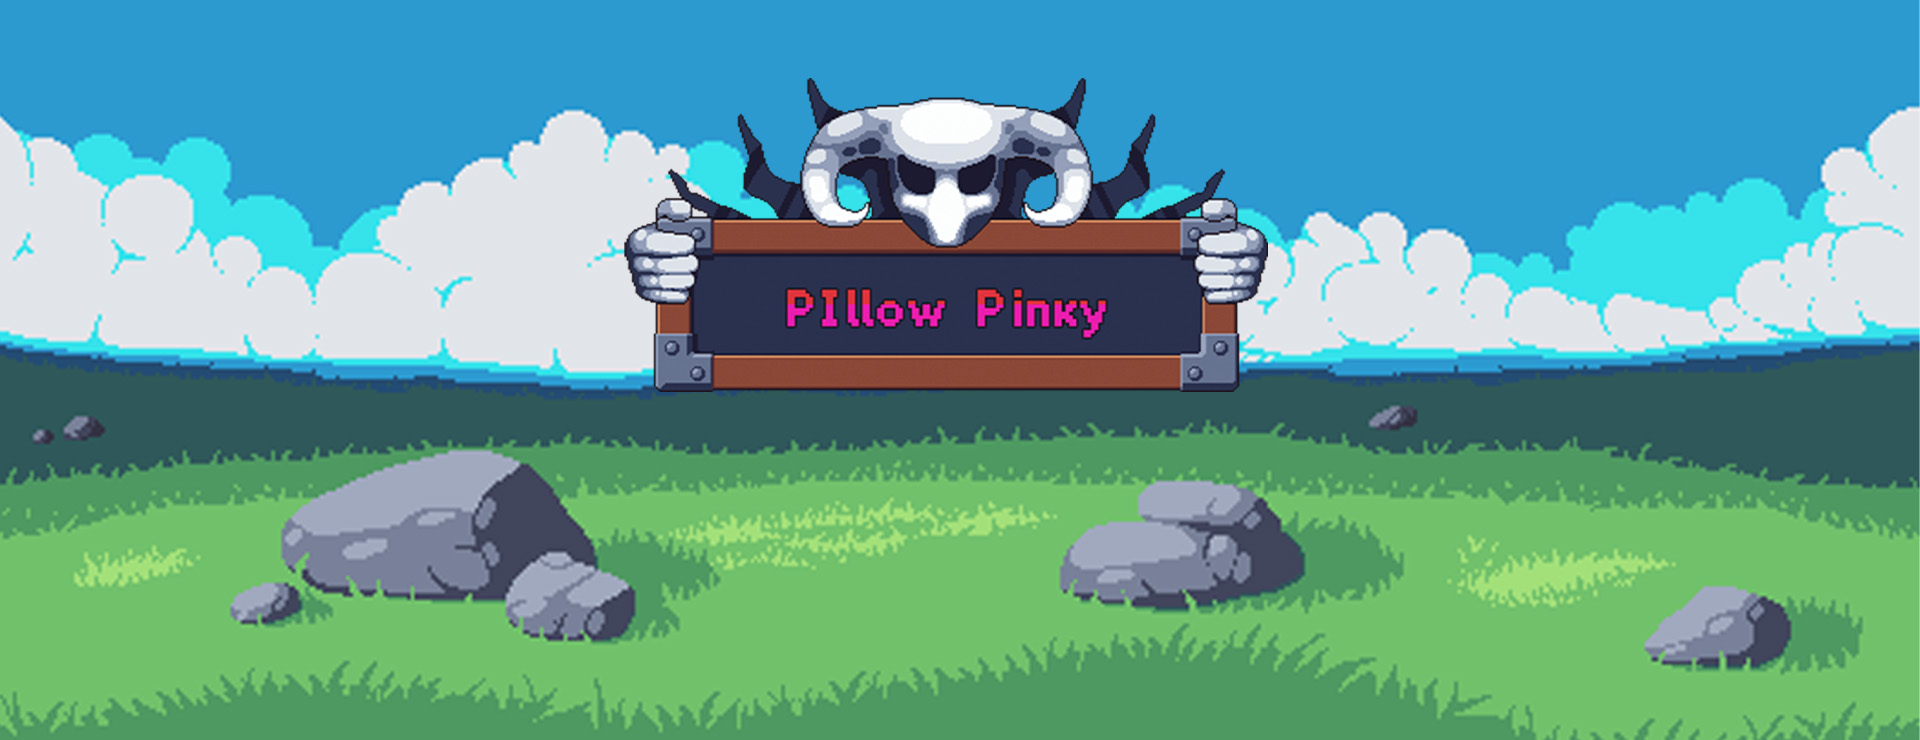 Pillow Pinky - Platformer Game